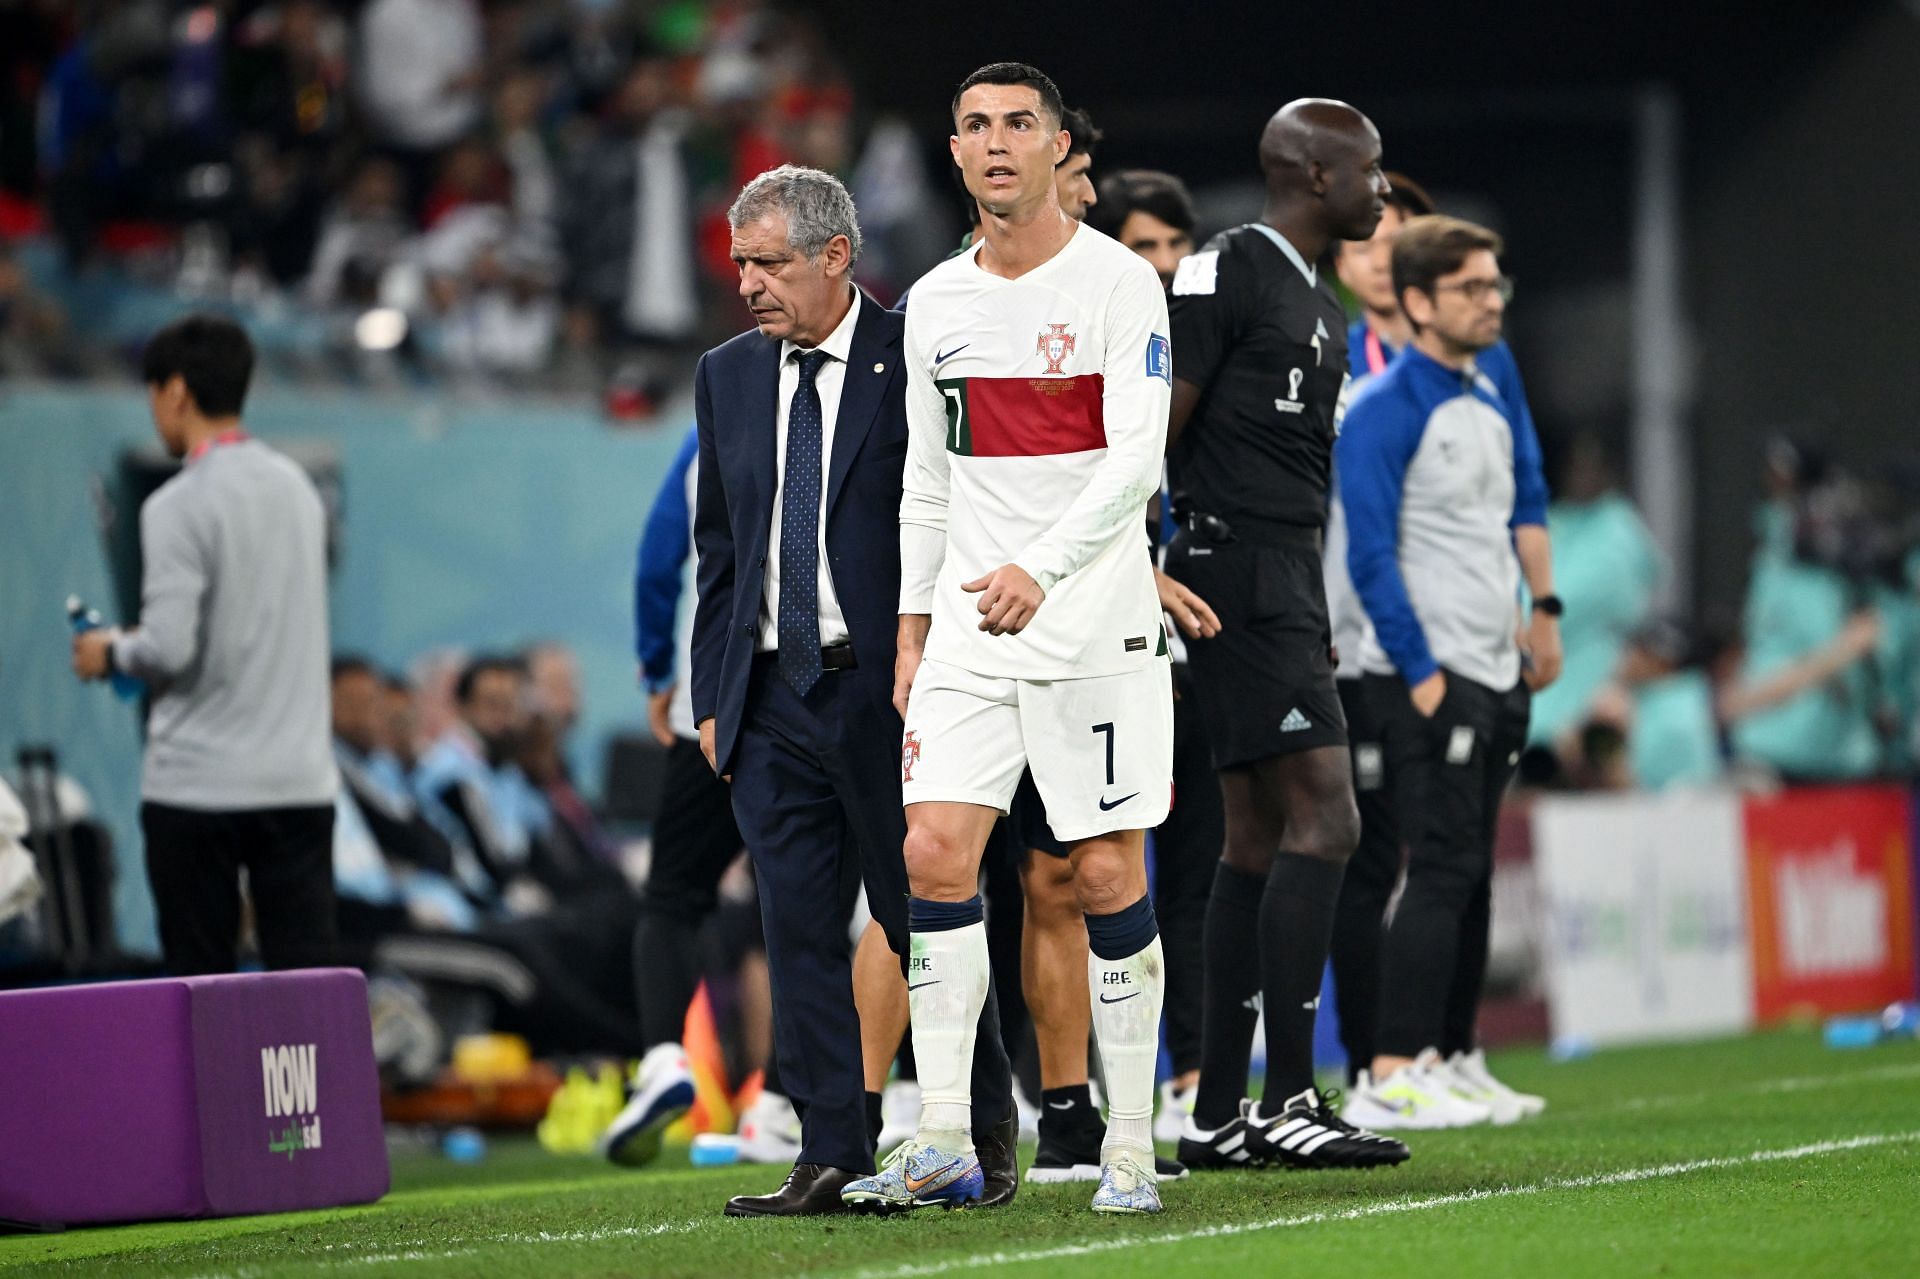 Ronaldo was not impressed